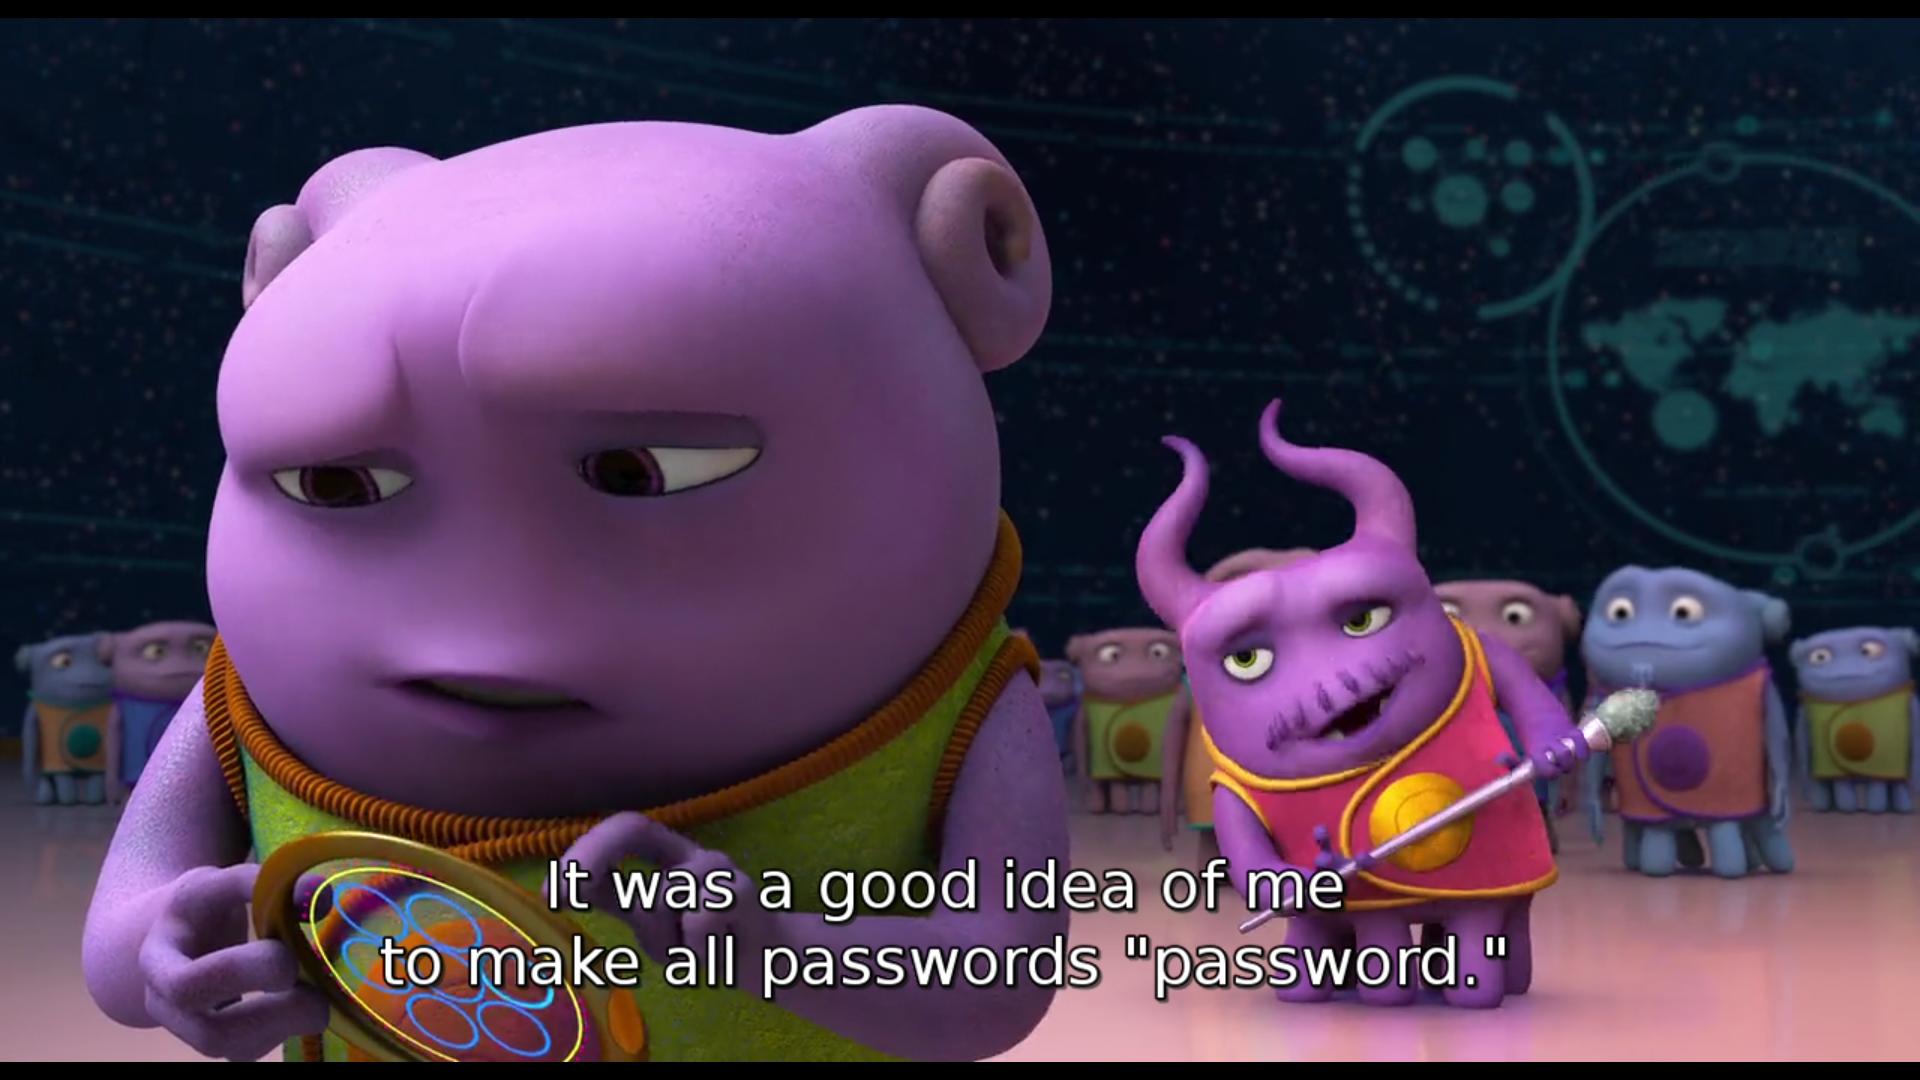 Good thing we set everyone's password to 'password'